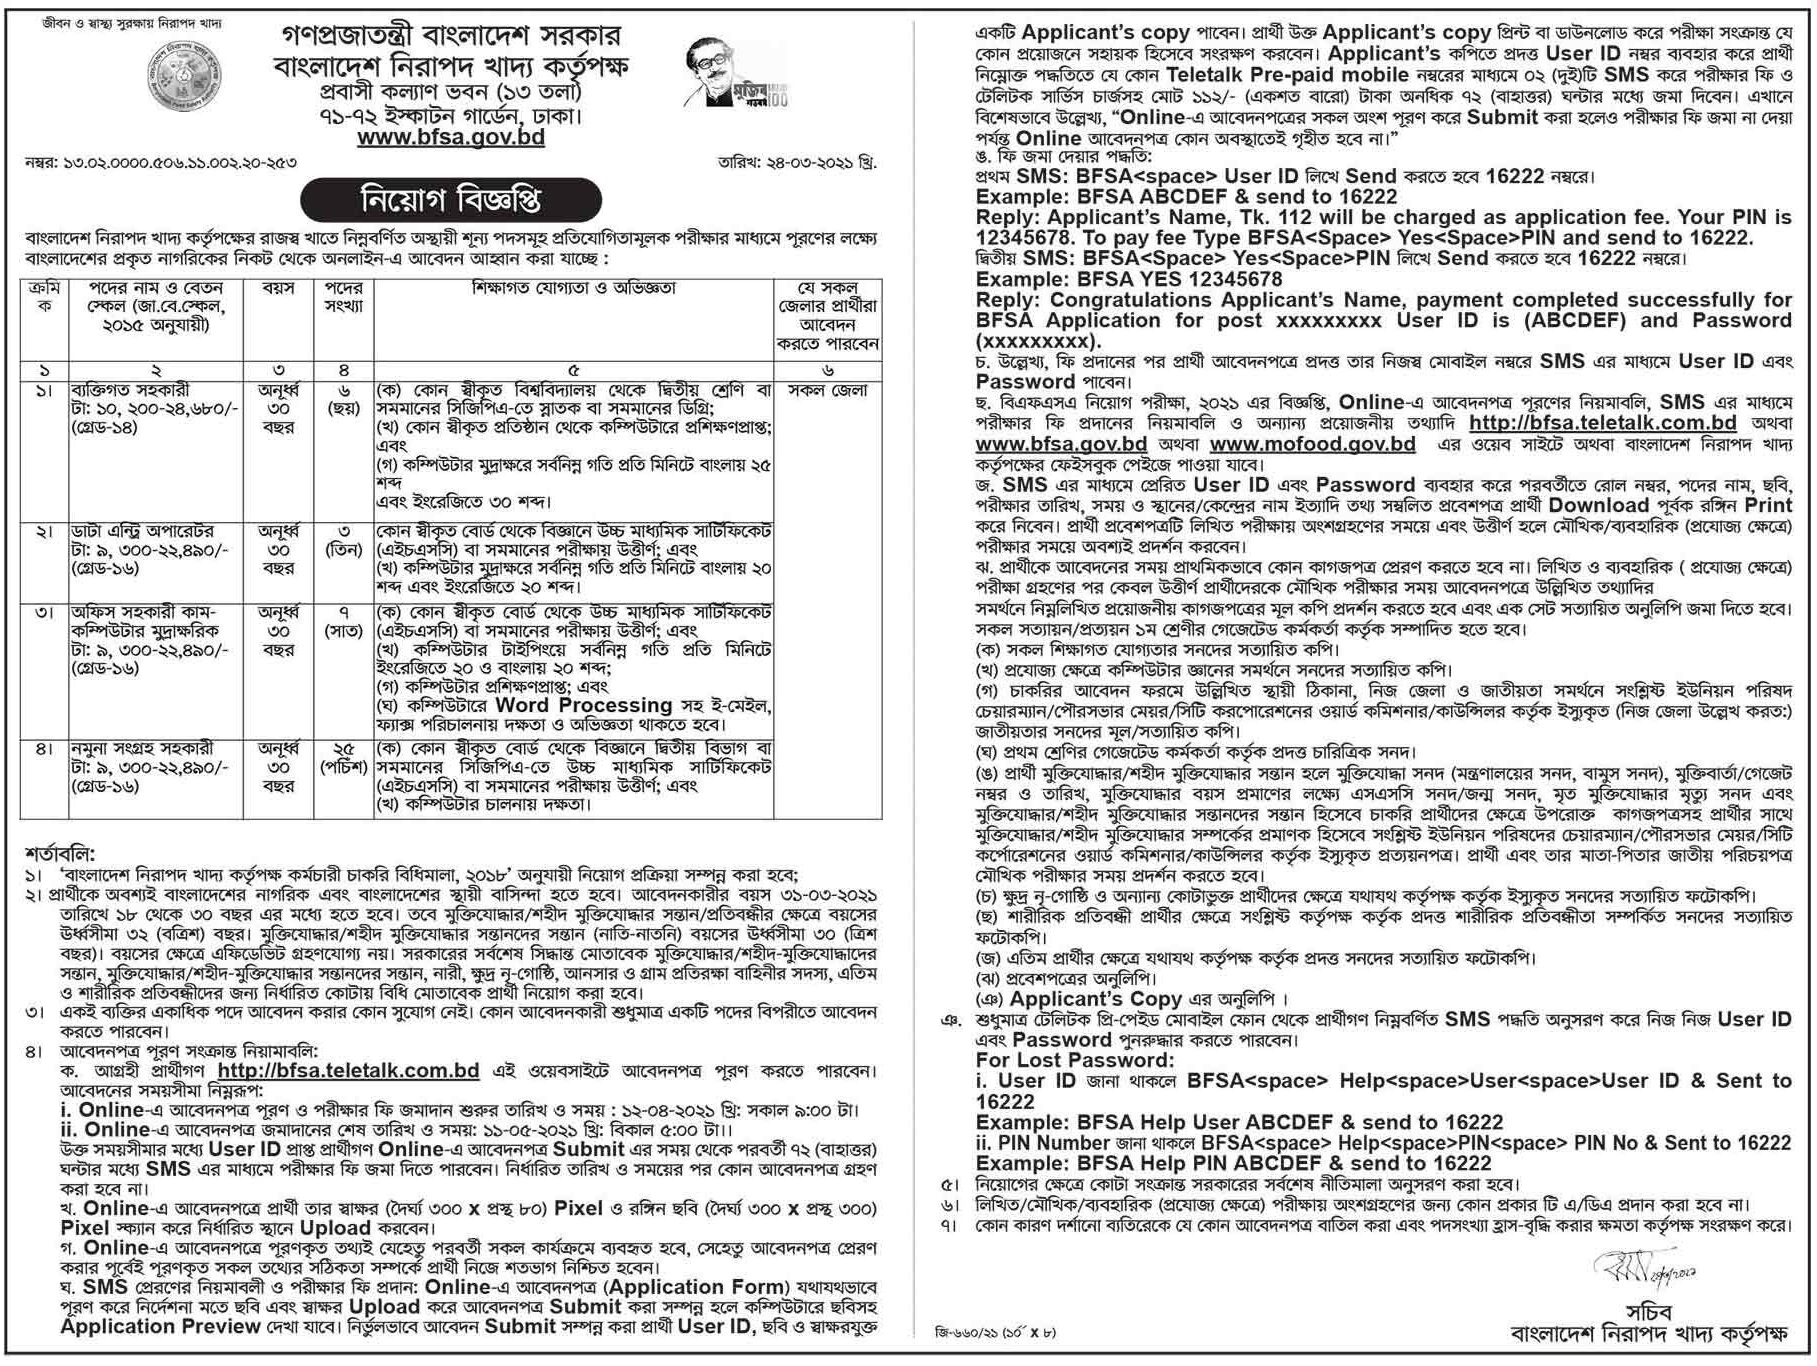 Bangladesh Safe Food Authority Recruitment Circular 2021 - বাংলাদেশ নিরাপদ খাদ্য কর্তৃপক্ষ নিয়োগ বিজ্ঞপ্তি ২০২১ - সরকারি চাকরির খবর ২০২১